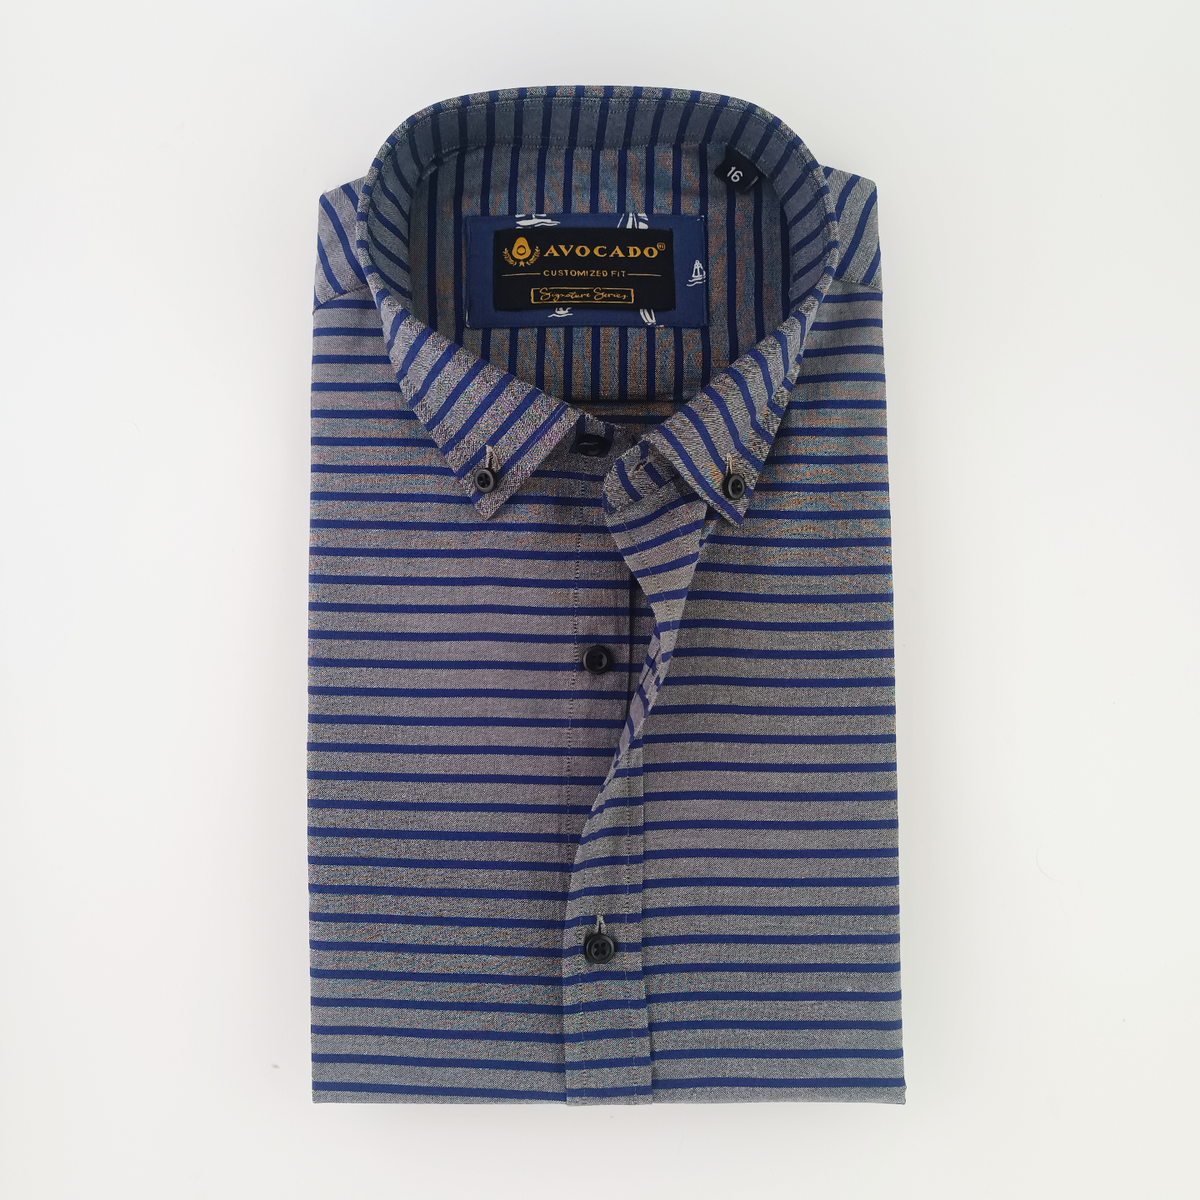 Grey & Navy Blue Lining Shirt